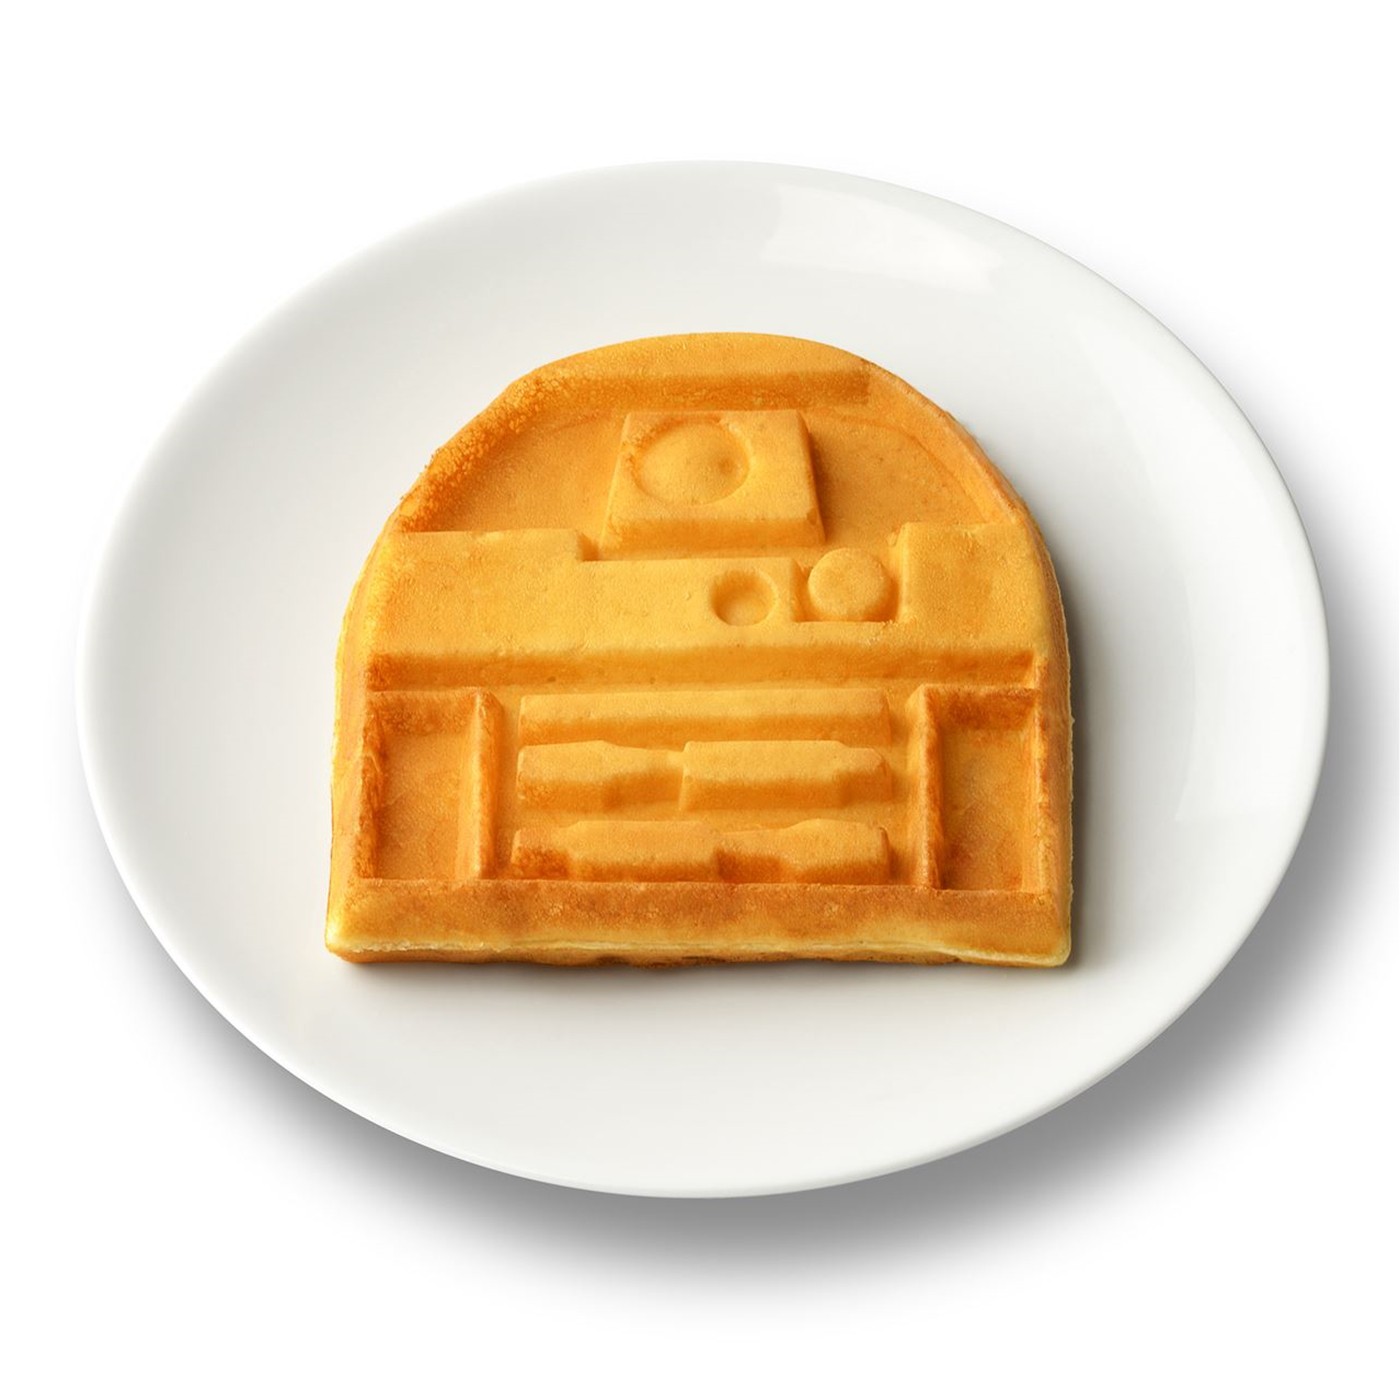 Star Wars R2-D2 Round Waffle Maker